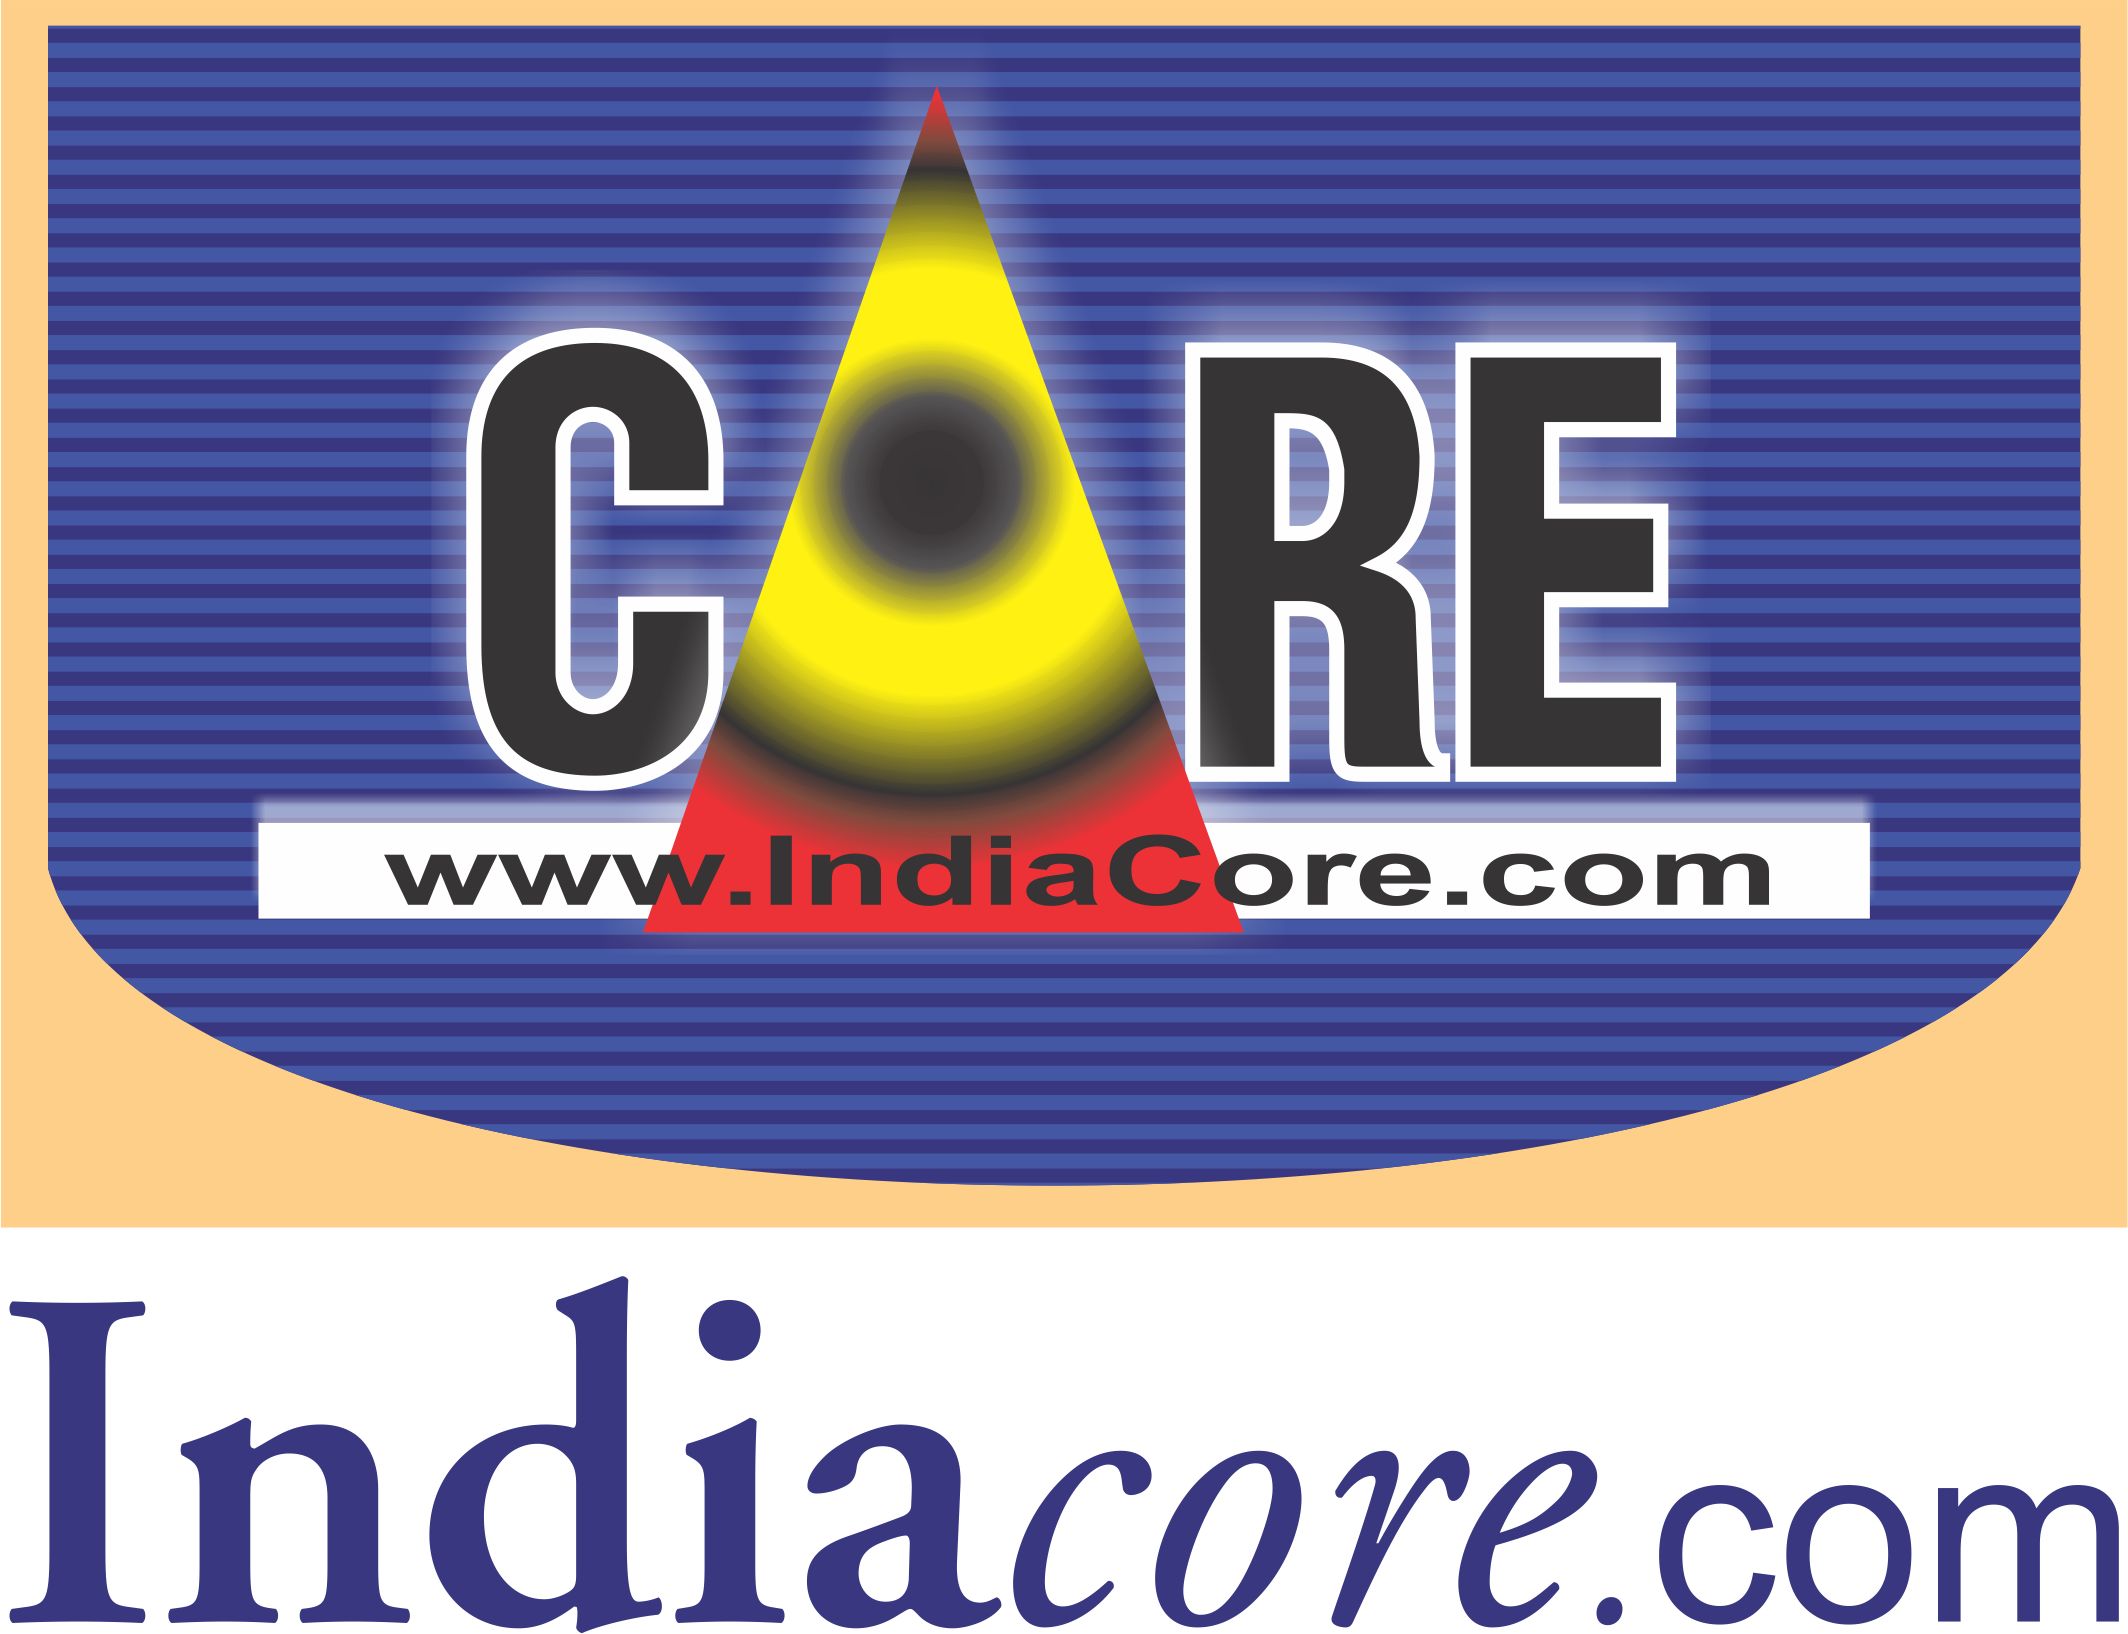 India Core LOGO